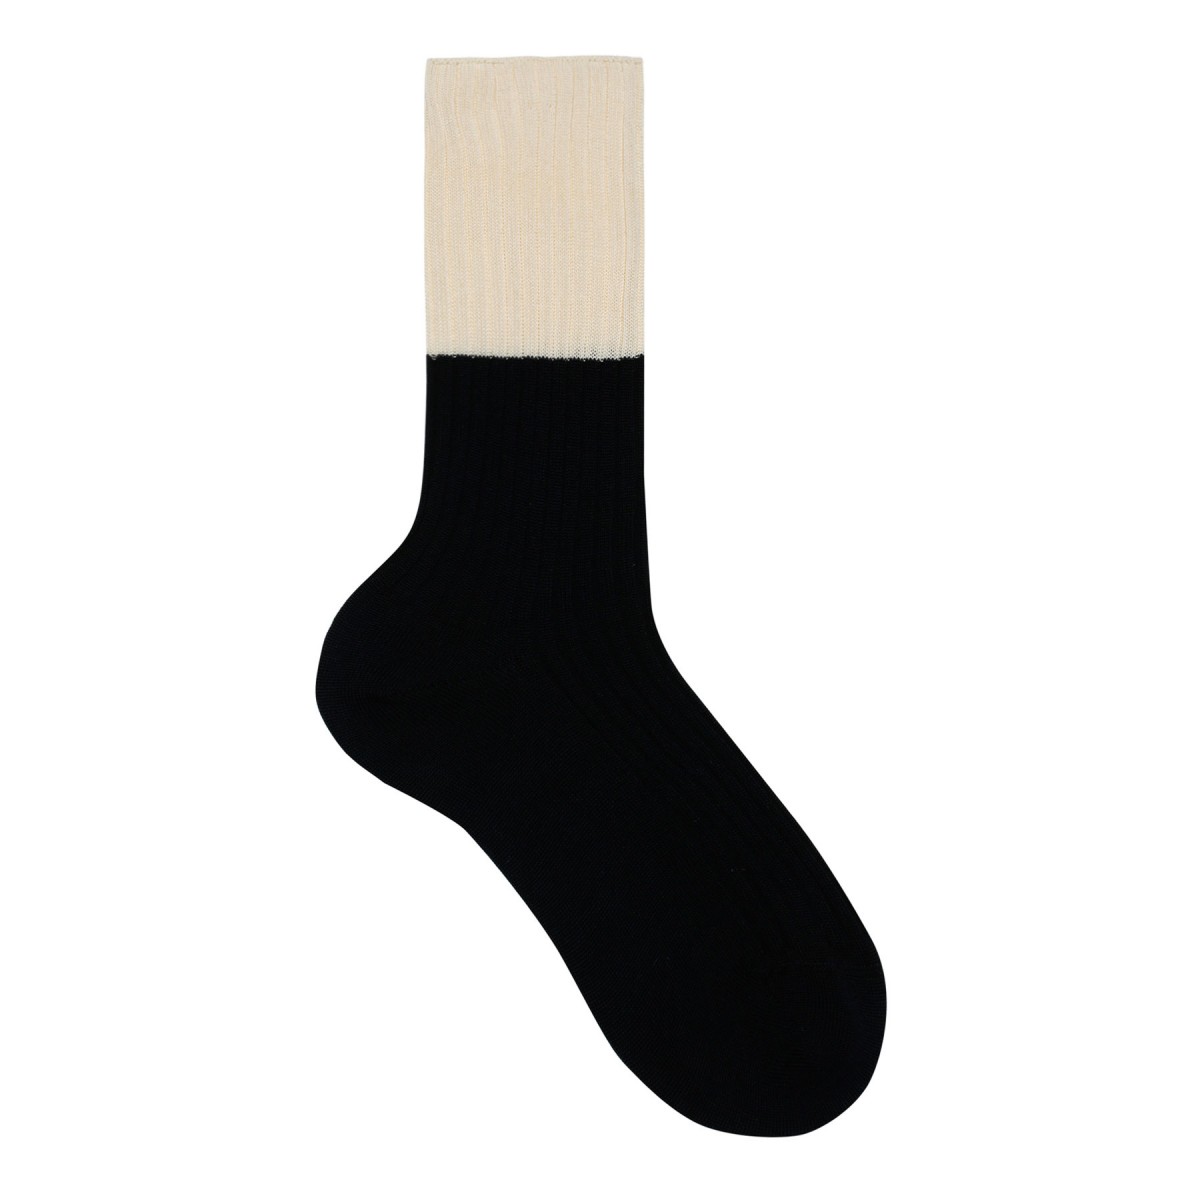 Two-tone cotton socks